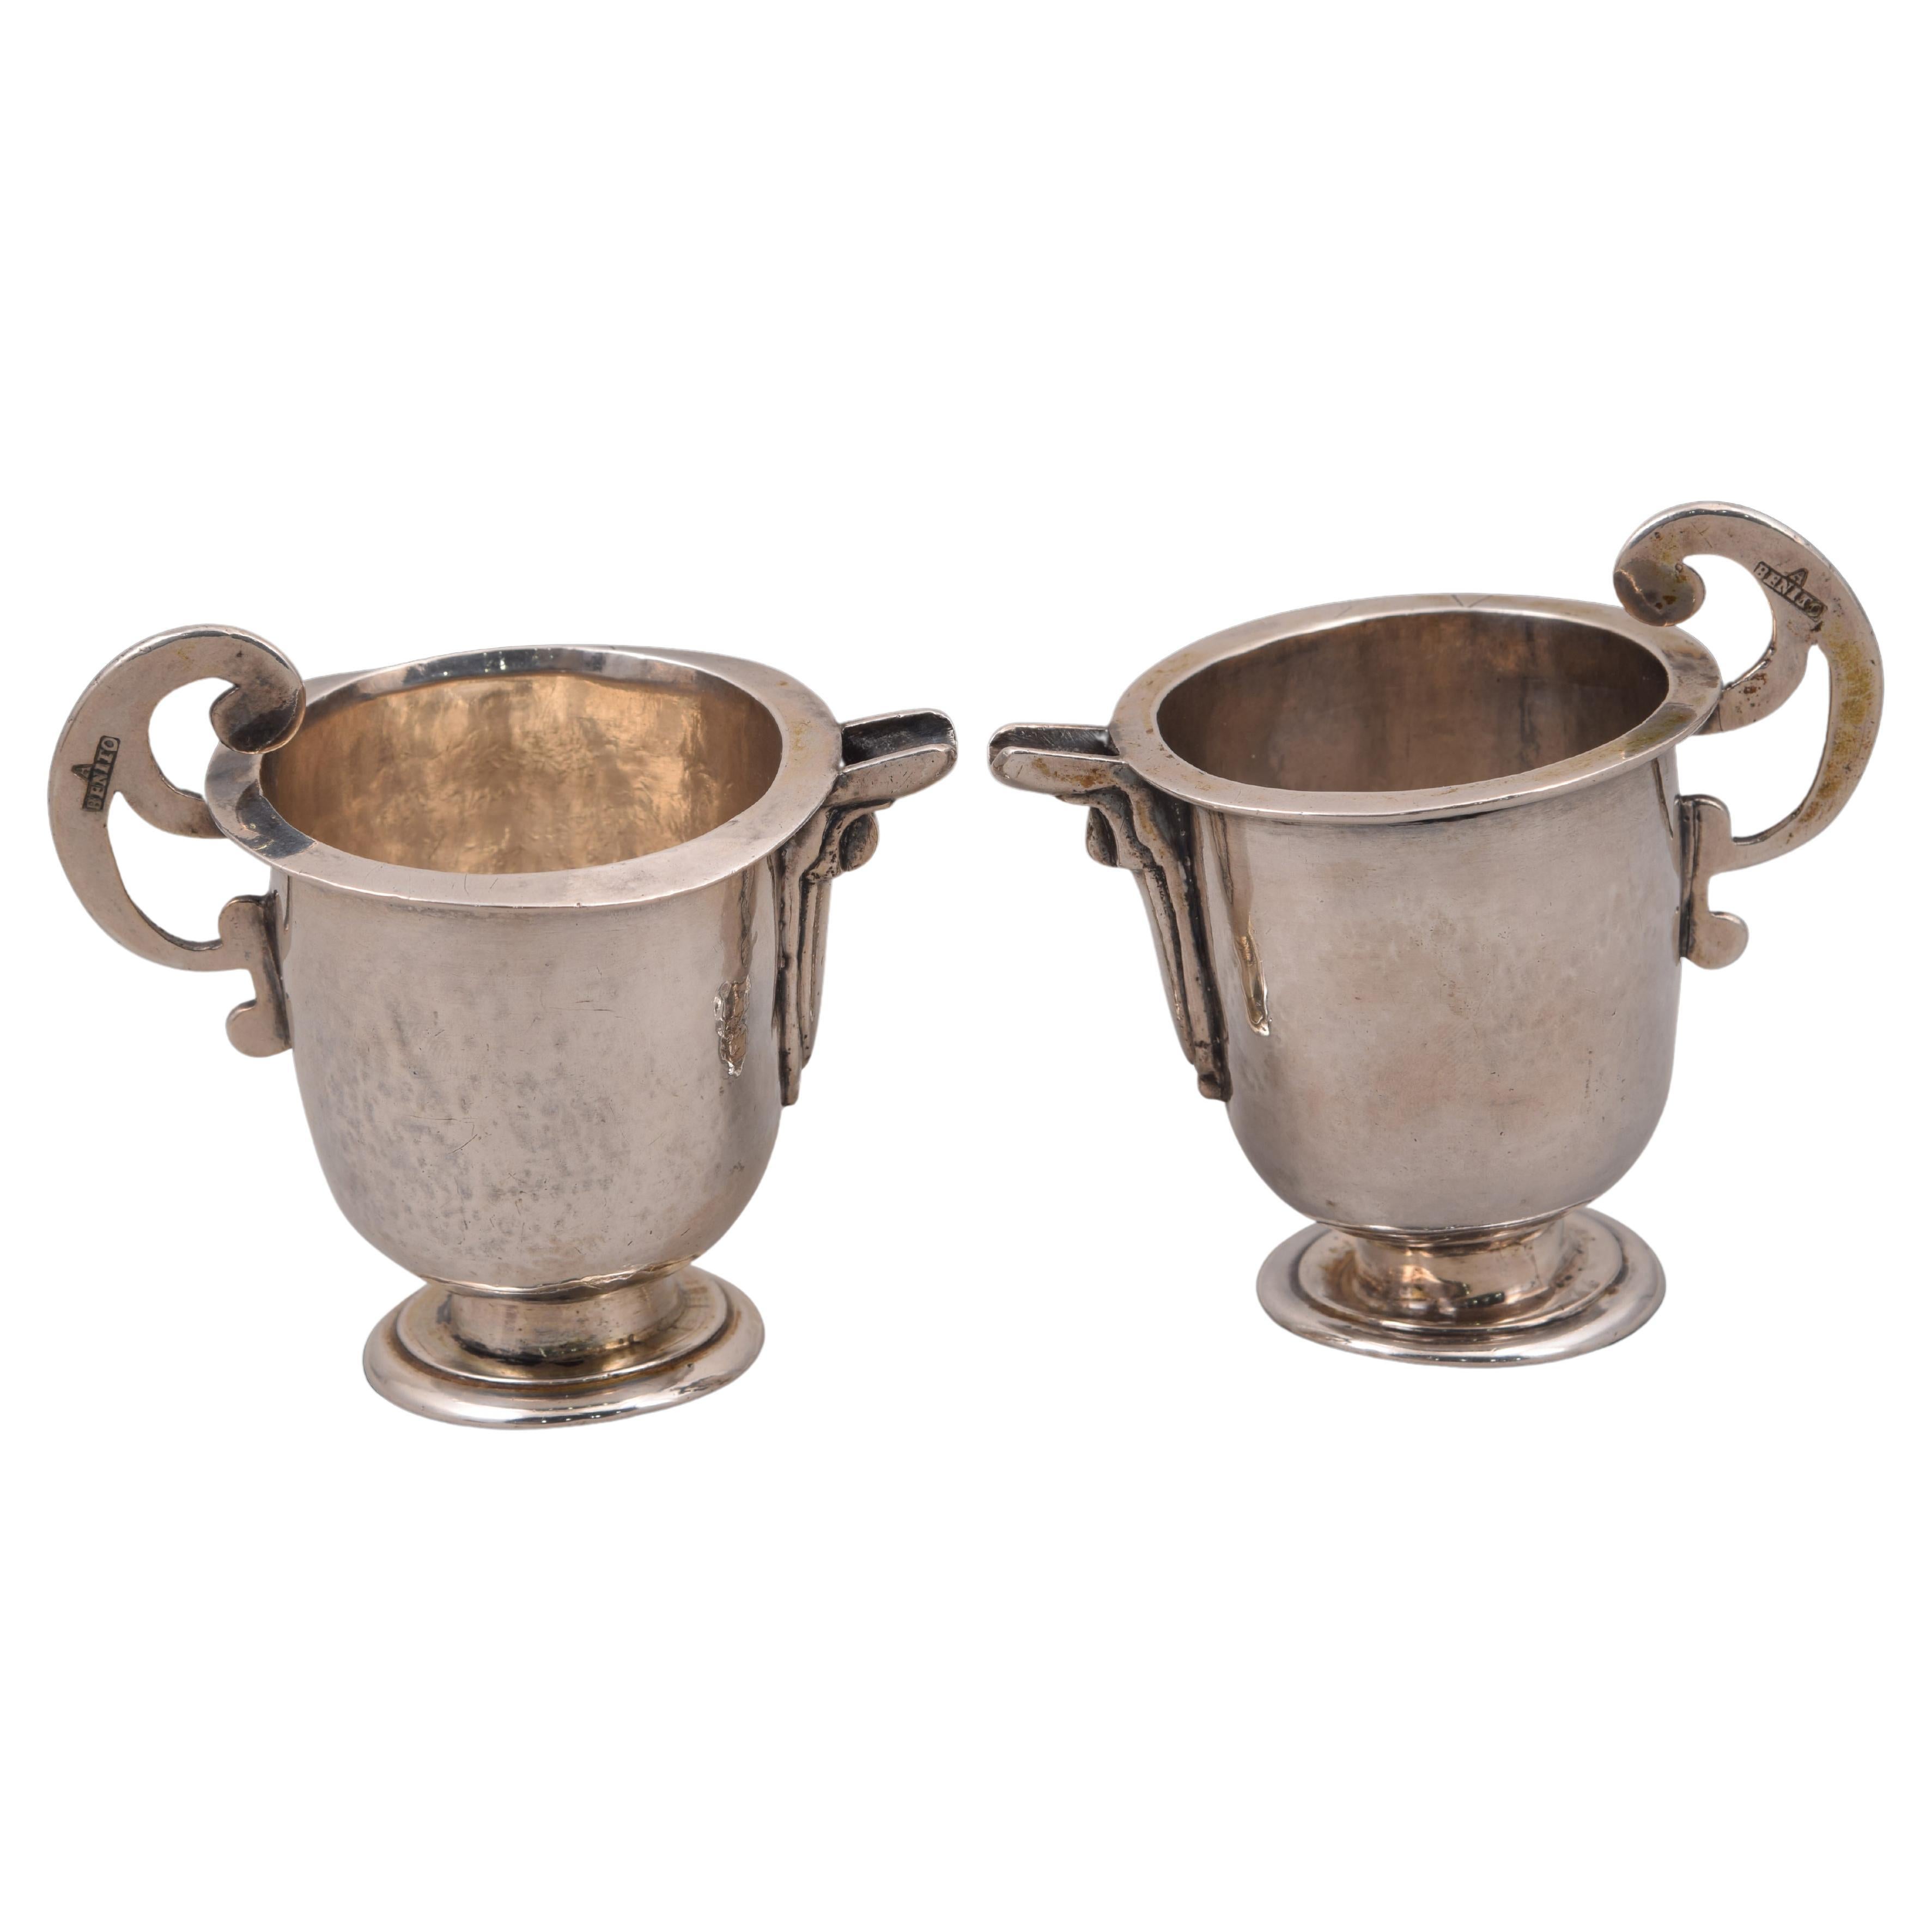 Two silver pitchers set. Benito Gómez, Antonio. Segovia, Spain, 1831-1835. For Sale